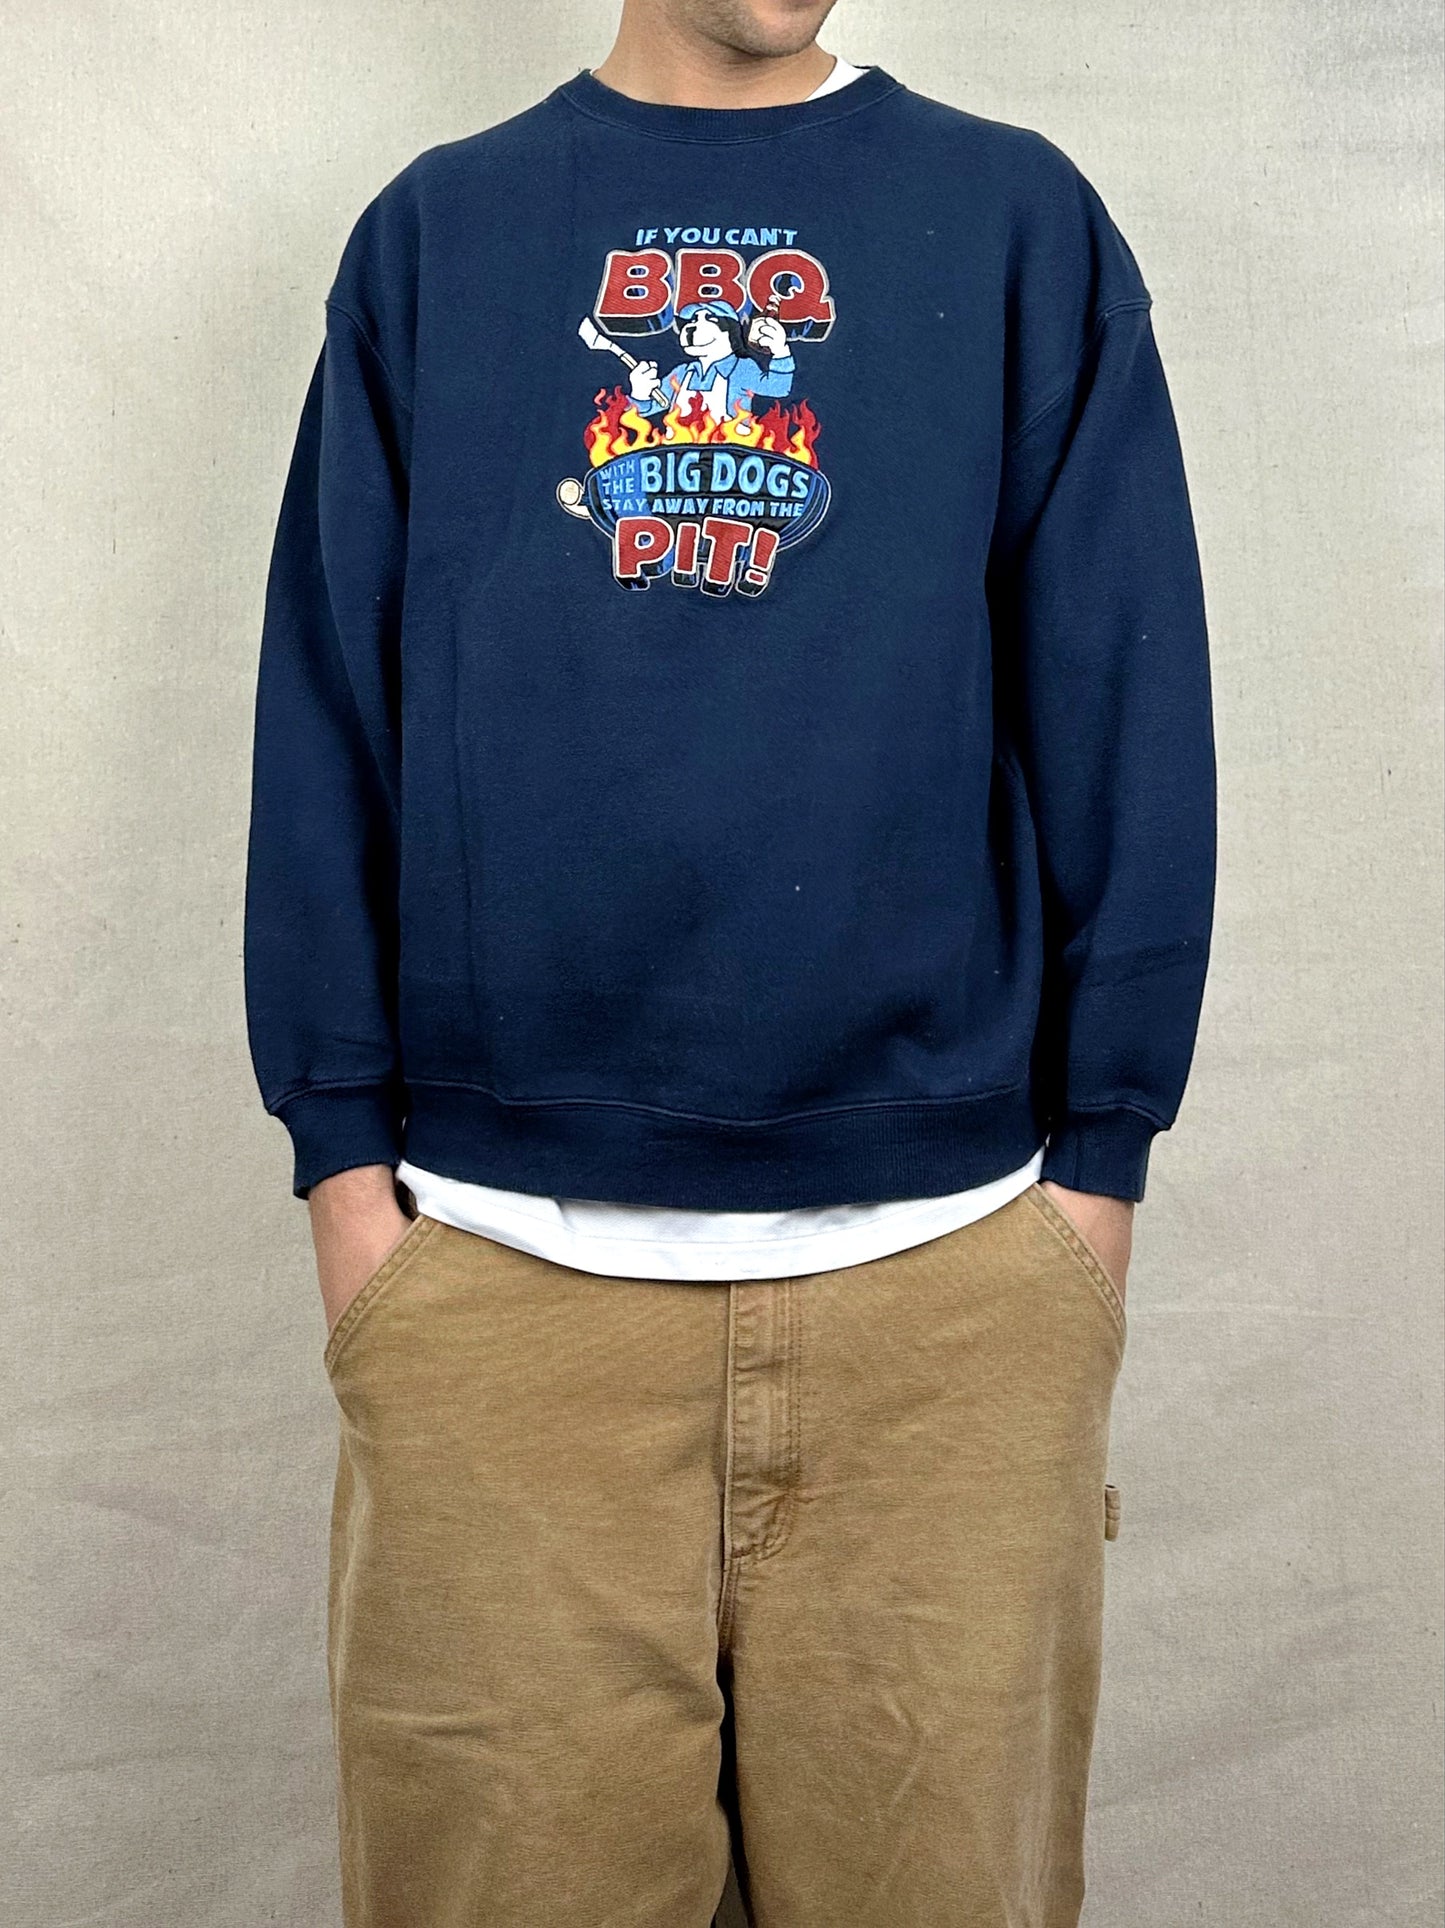 90's Big Dogs BBQ Embroidered Vintage Sweatshirt Size M